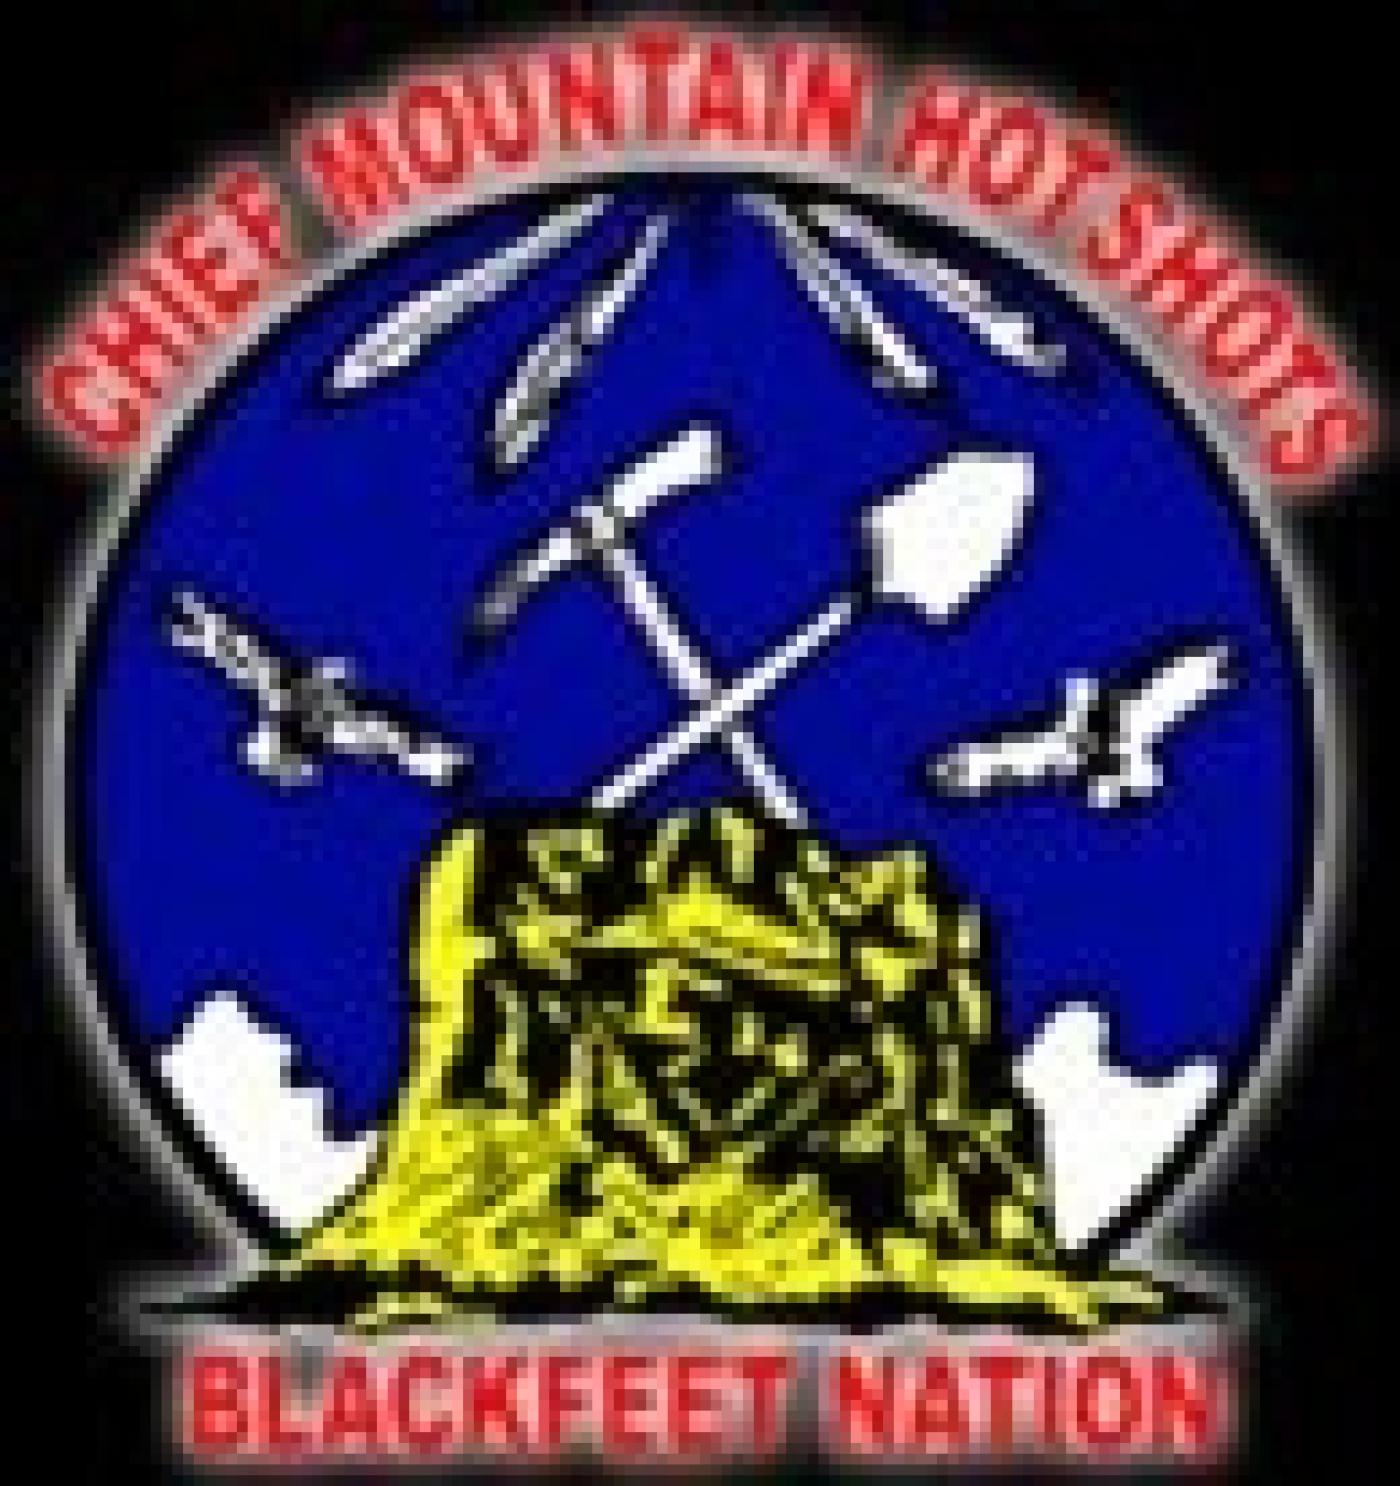 Chief Mountain hotshot crew logo